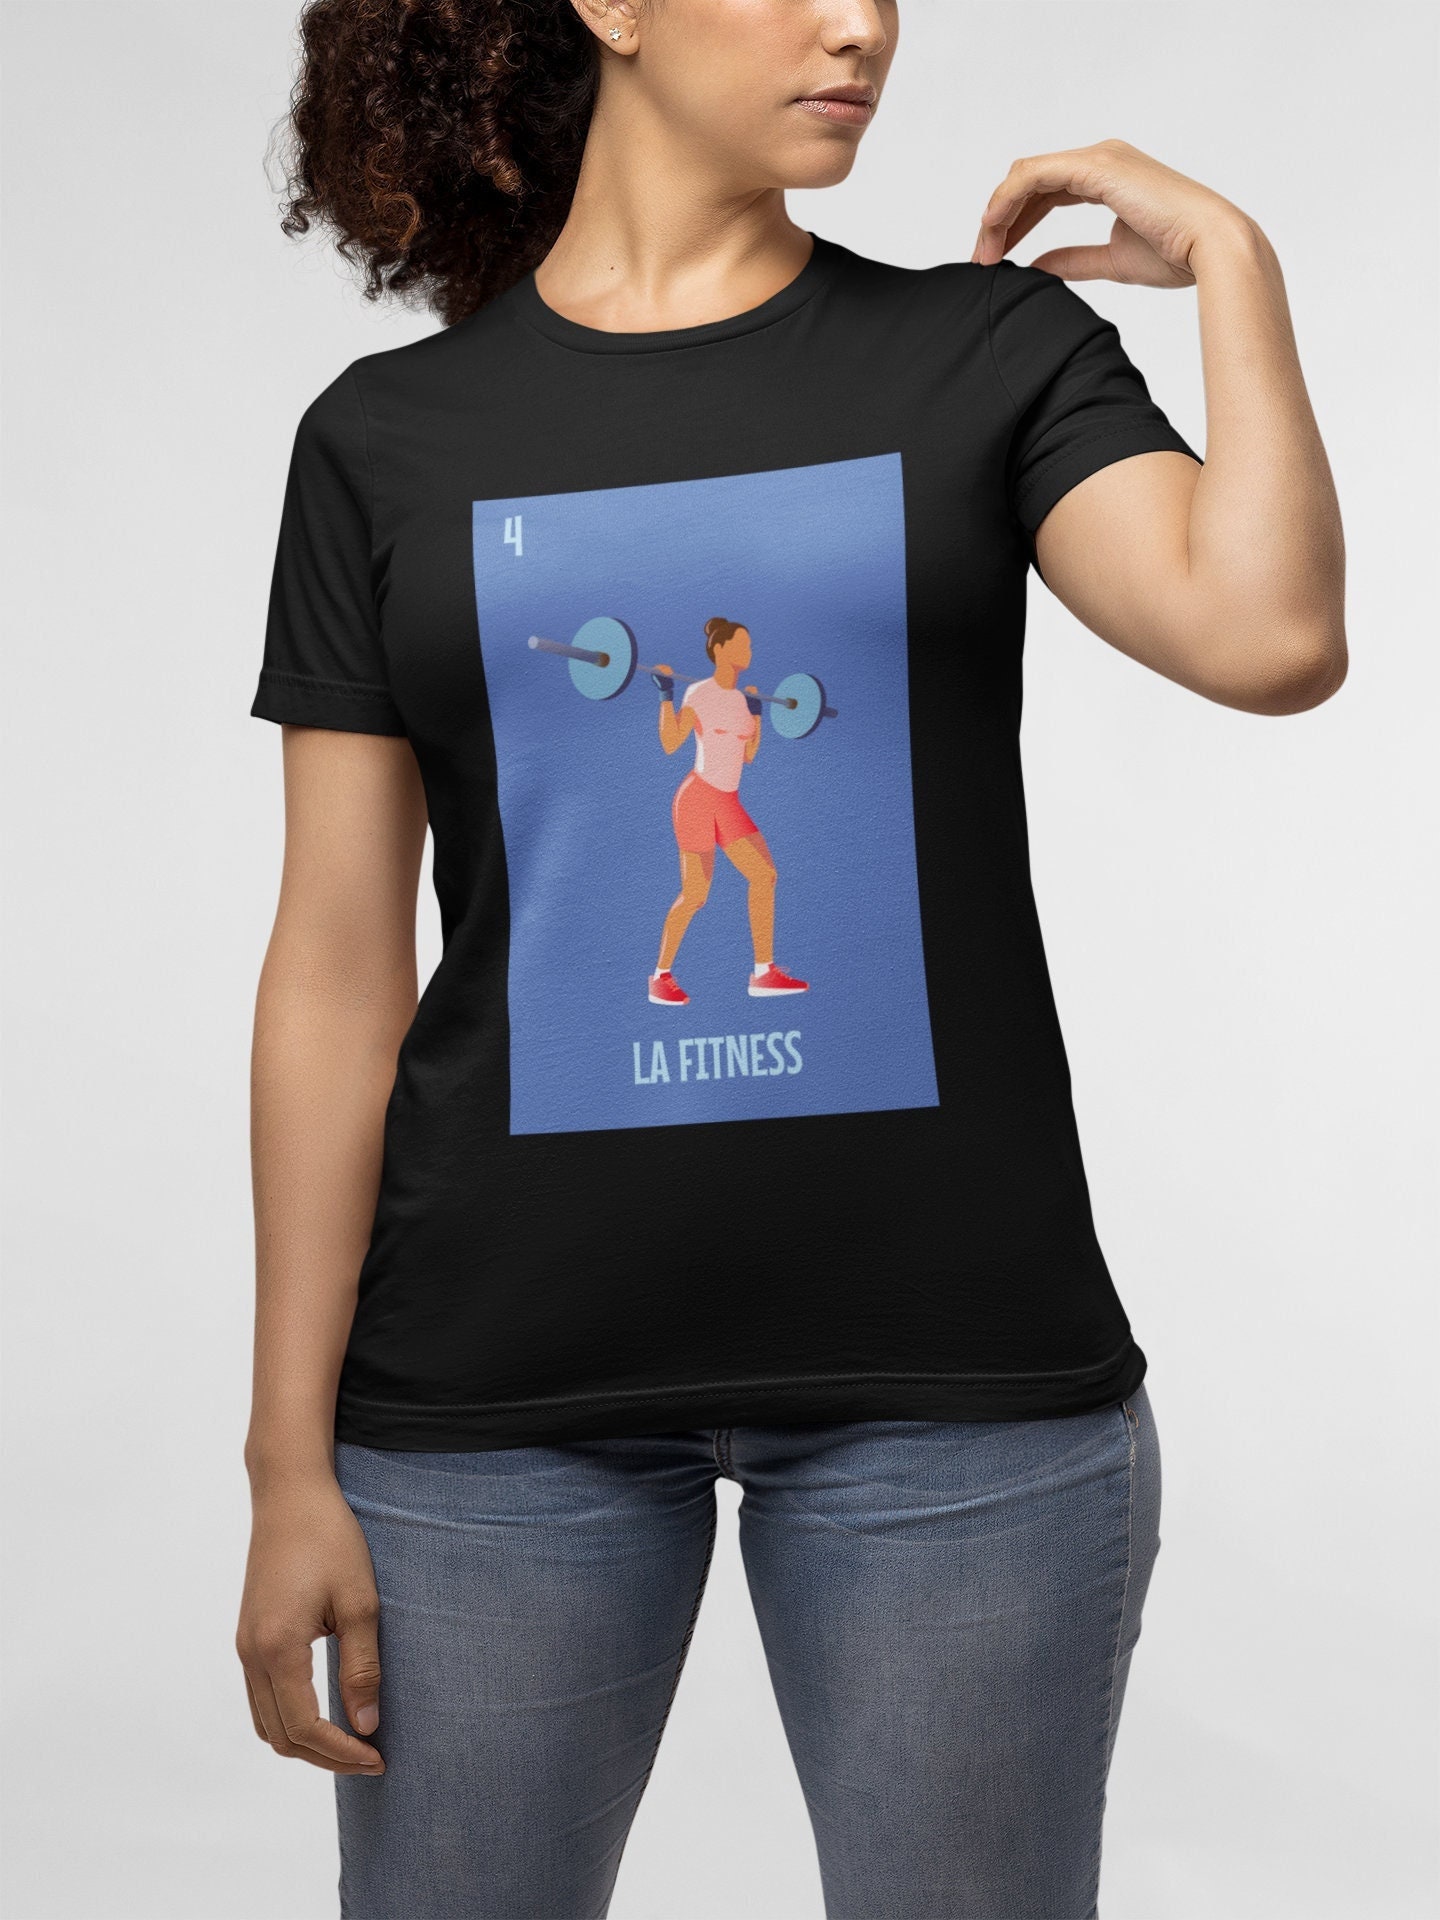 La Fitness Shirt,loteria Fitness Card,loteria Shirt,loteria Design  Tee,latina Mexican Women Shirt,weightlifter Shirt,chingona,latina Pride 